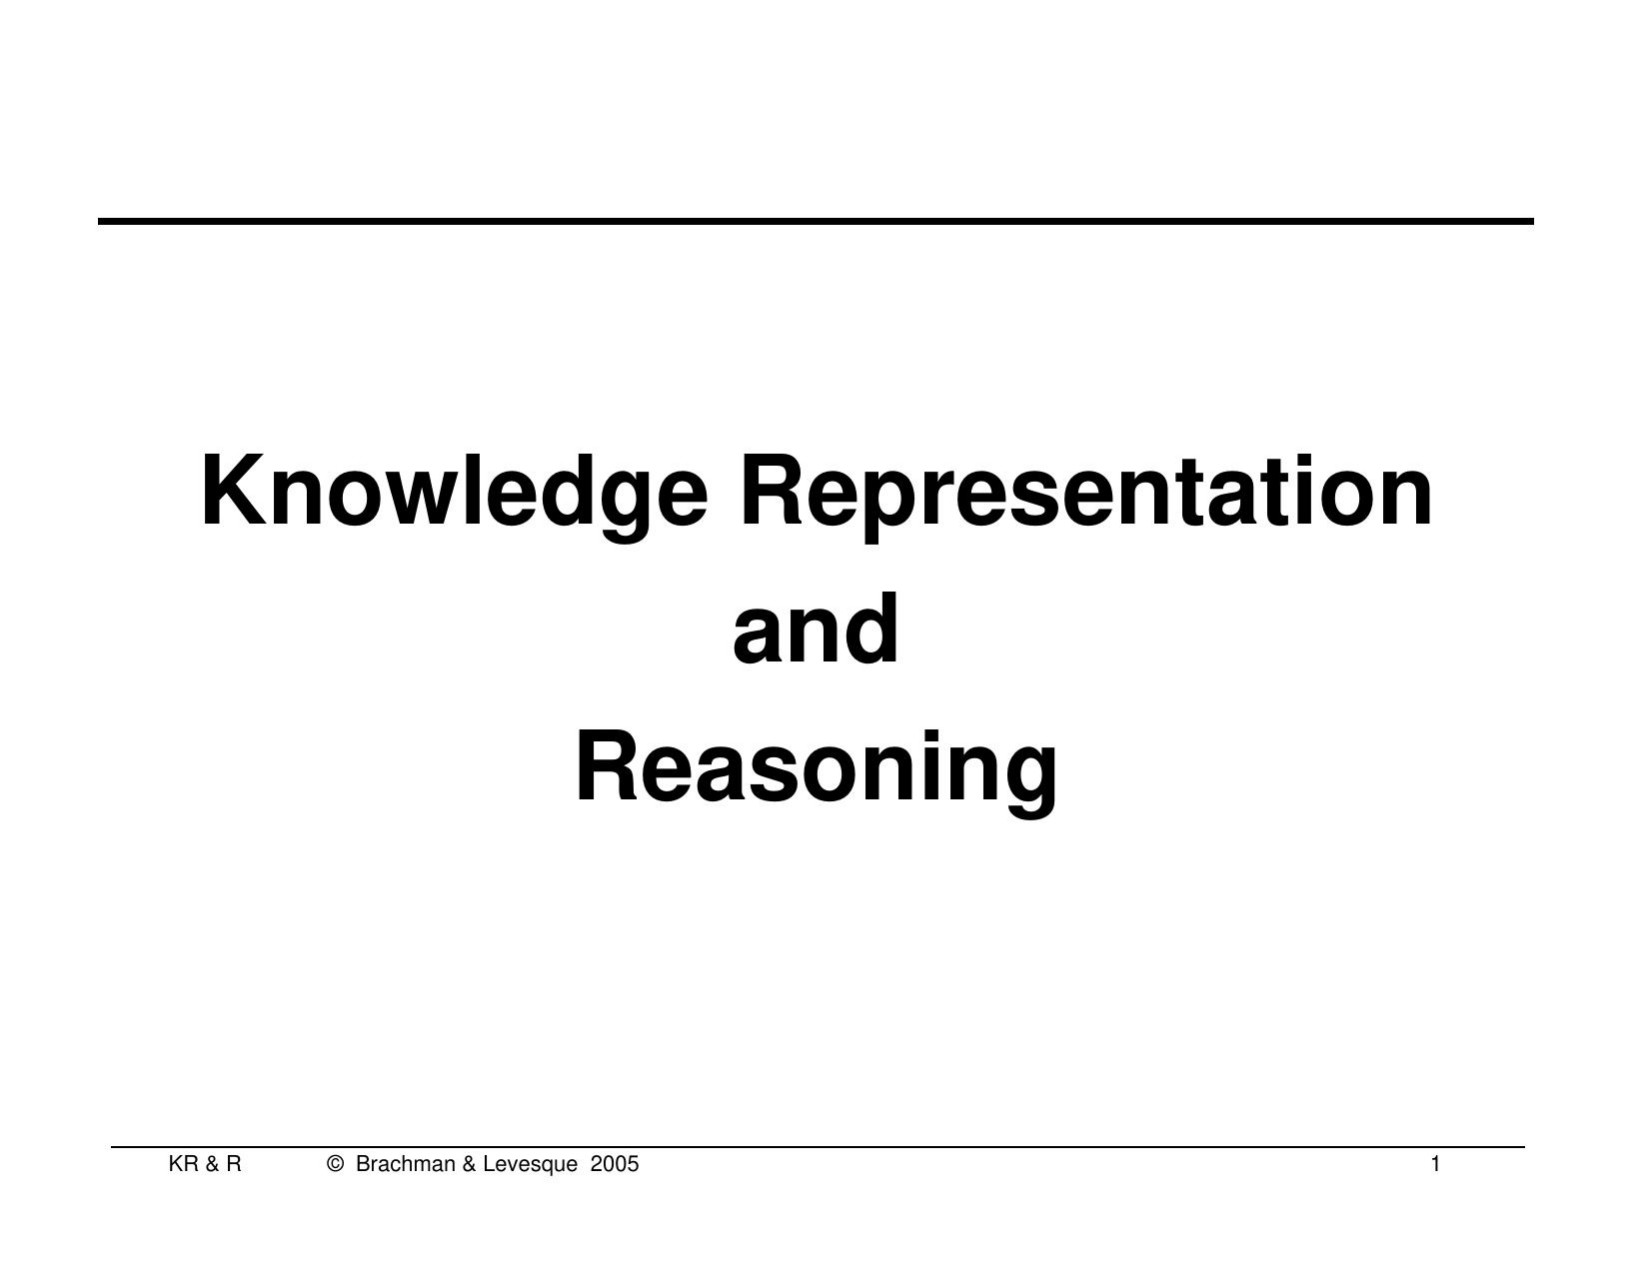 Knowledge Representation and Reasoning - Slideshow